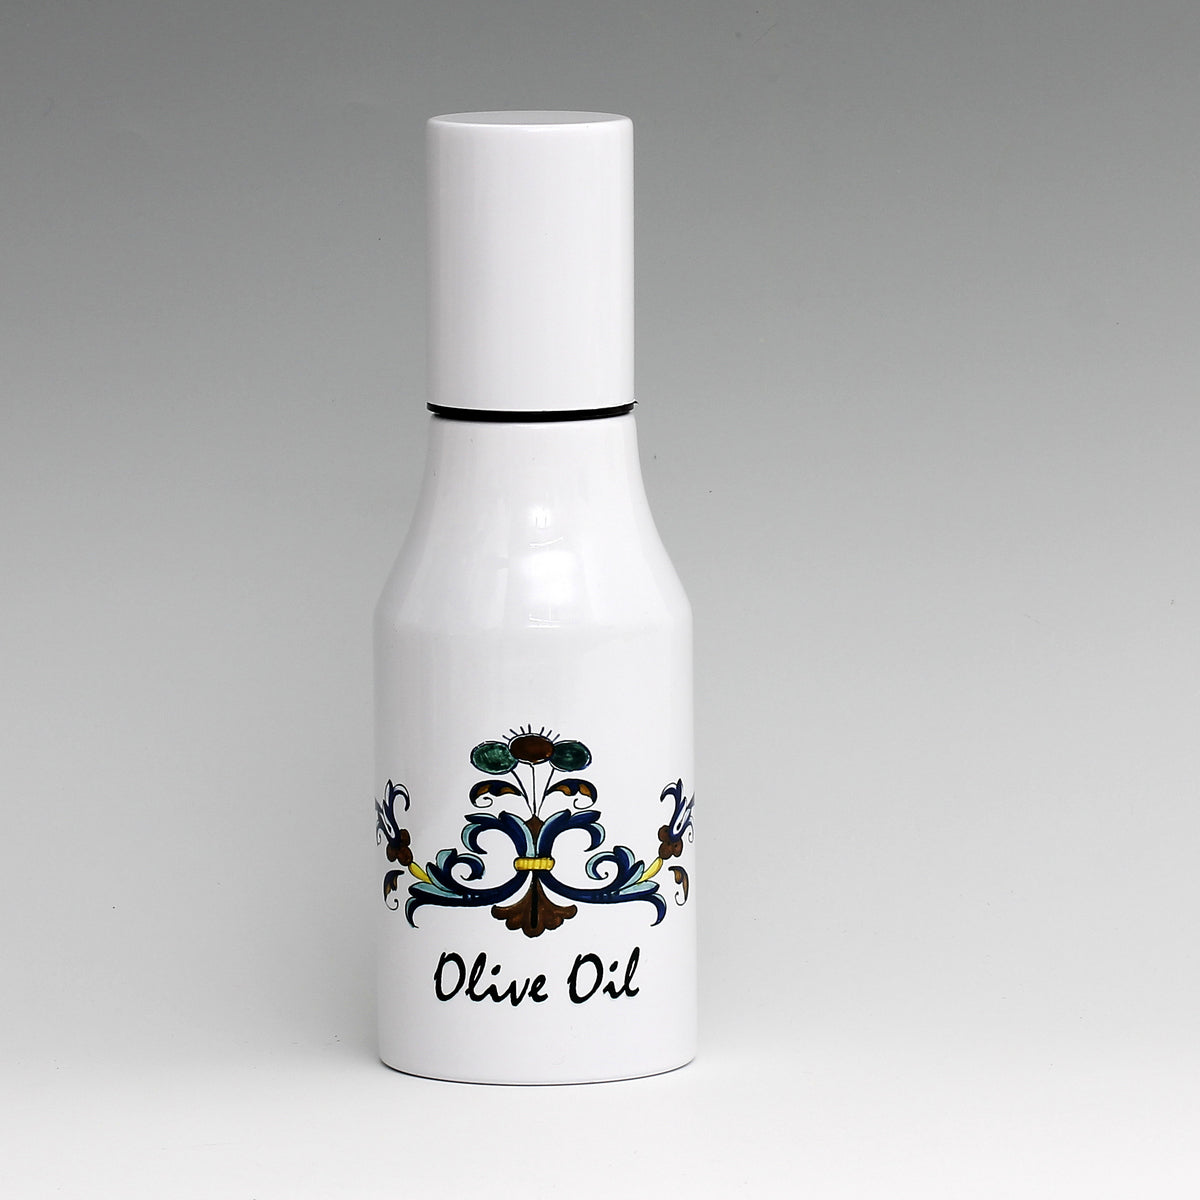 SUBLIMART: Olive Oil Dispenser with non-drip pourer and dust cover cap. (Deruta Design 02)